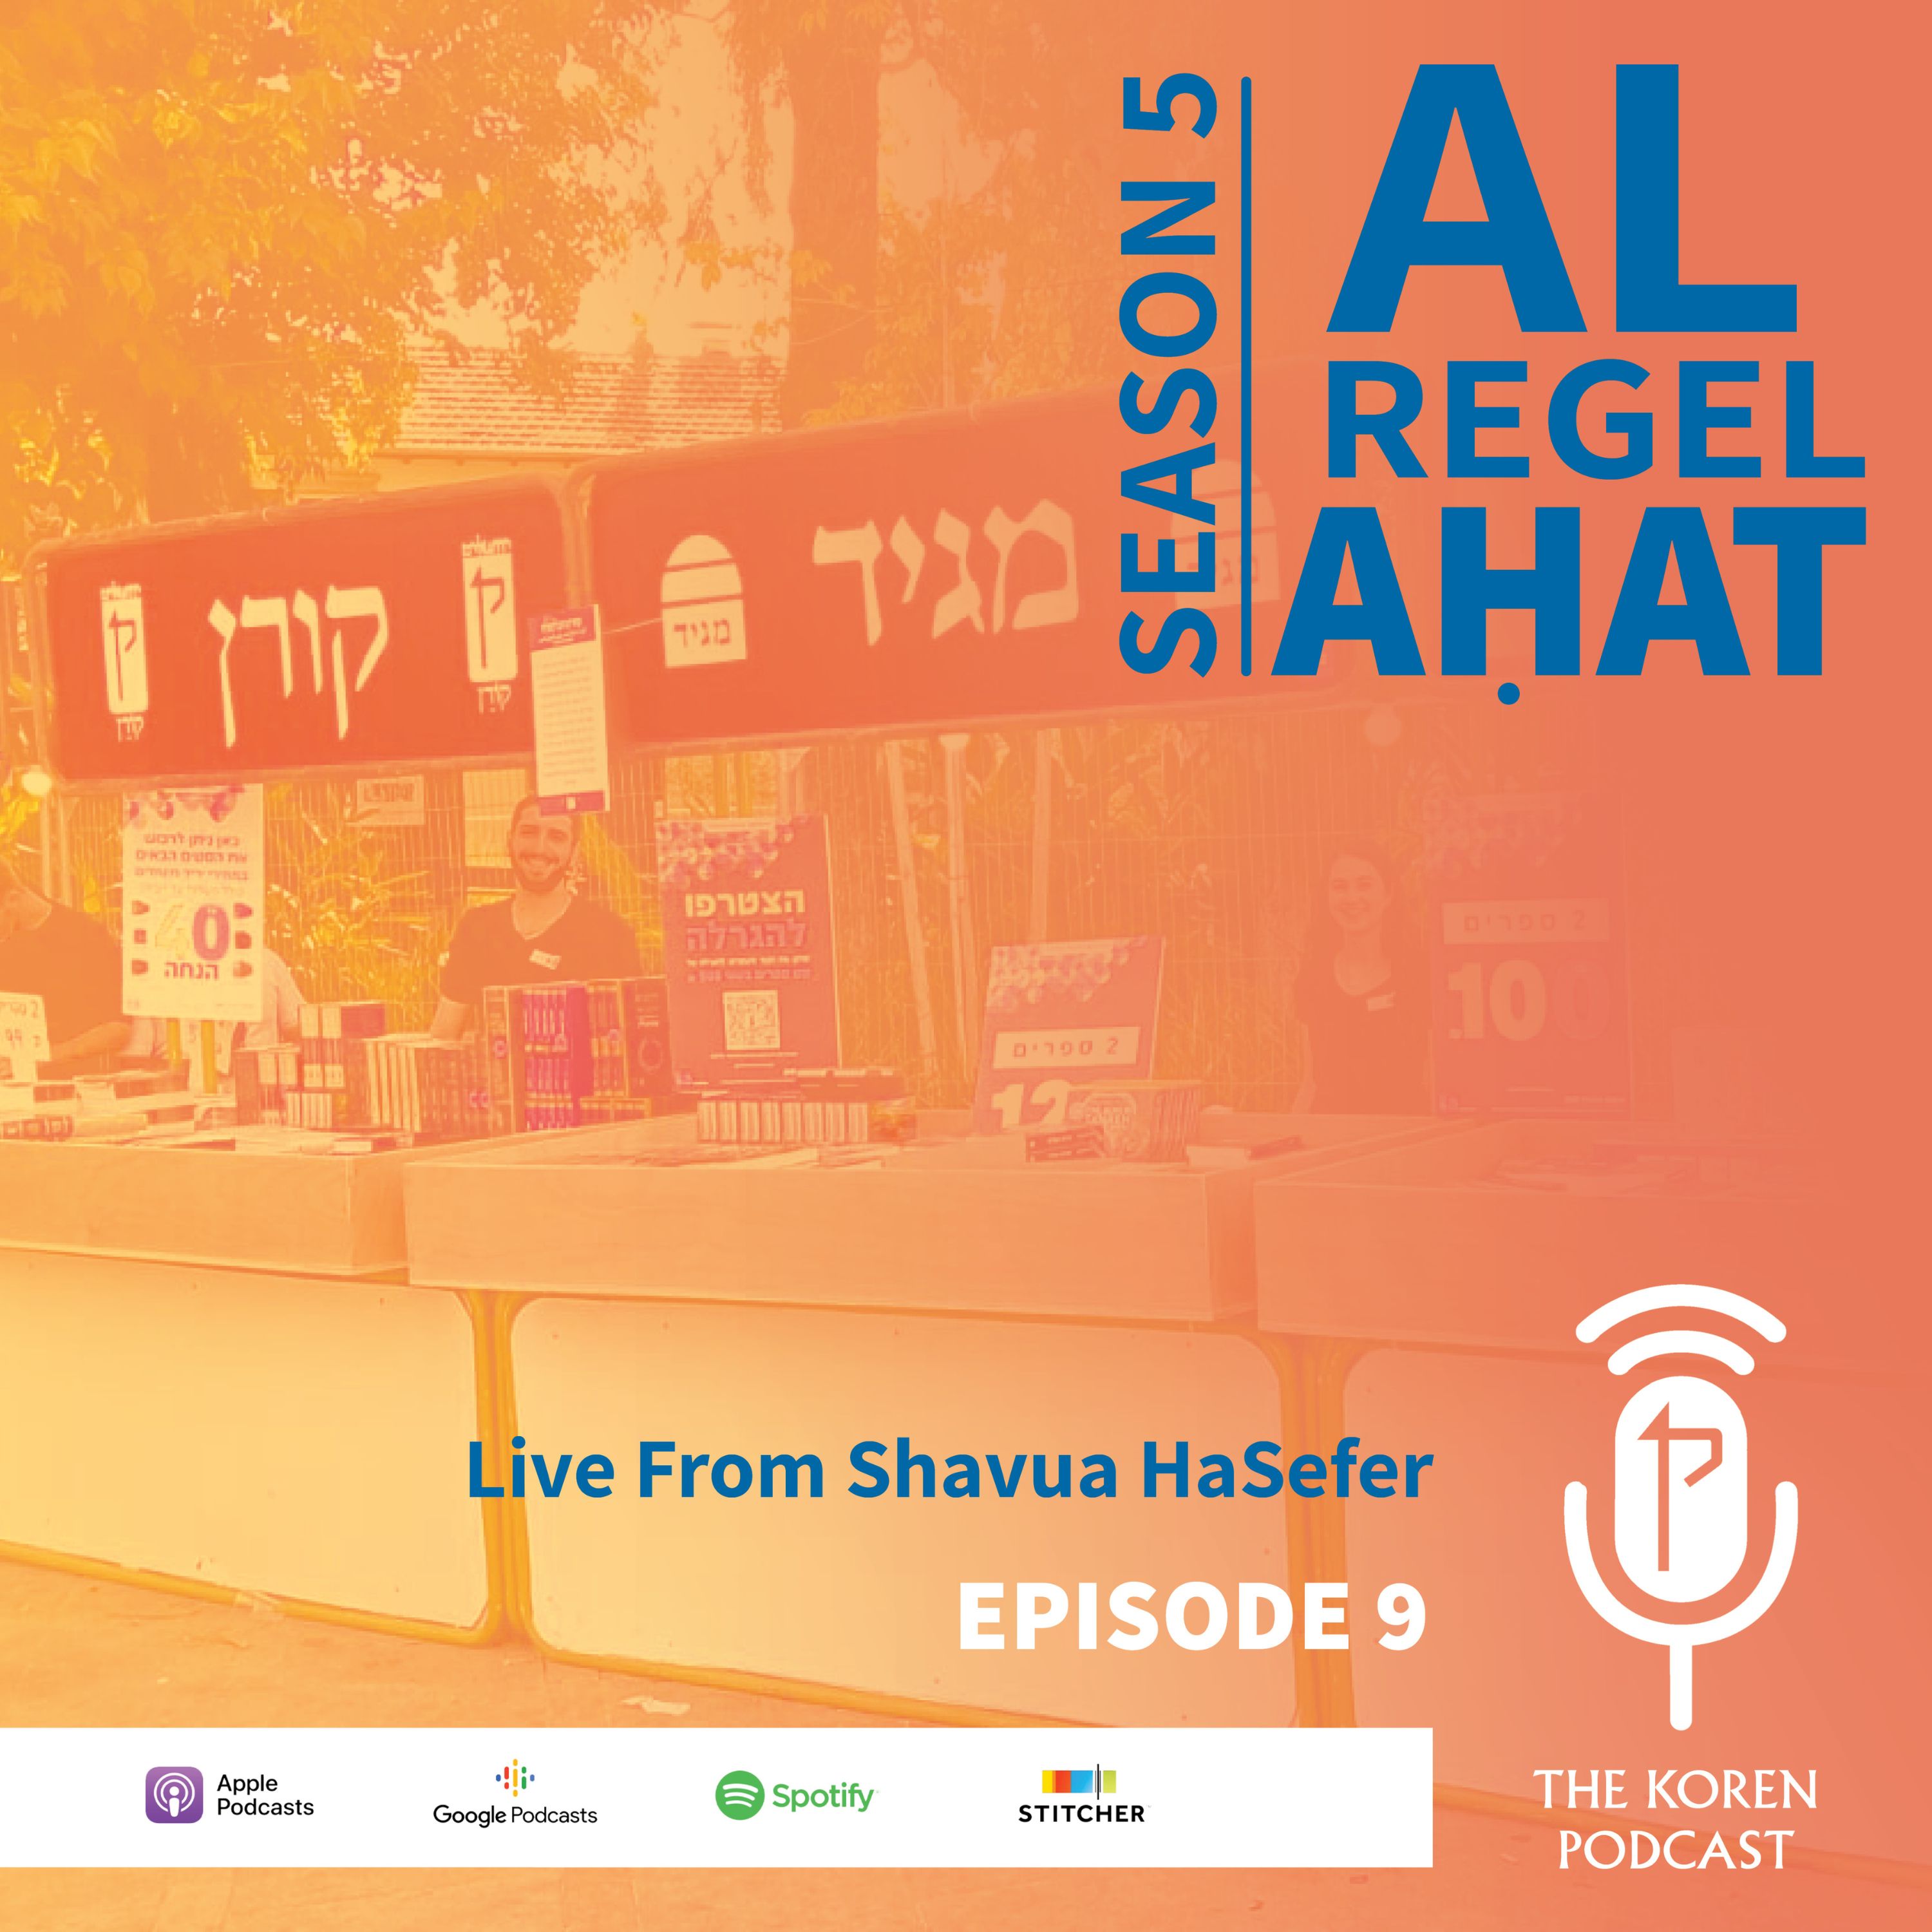 Live From Shavua HaSefer!